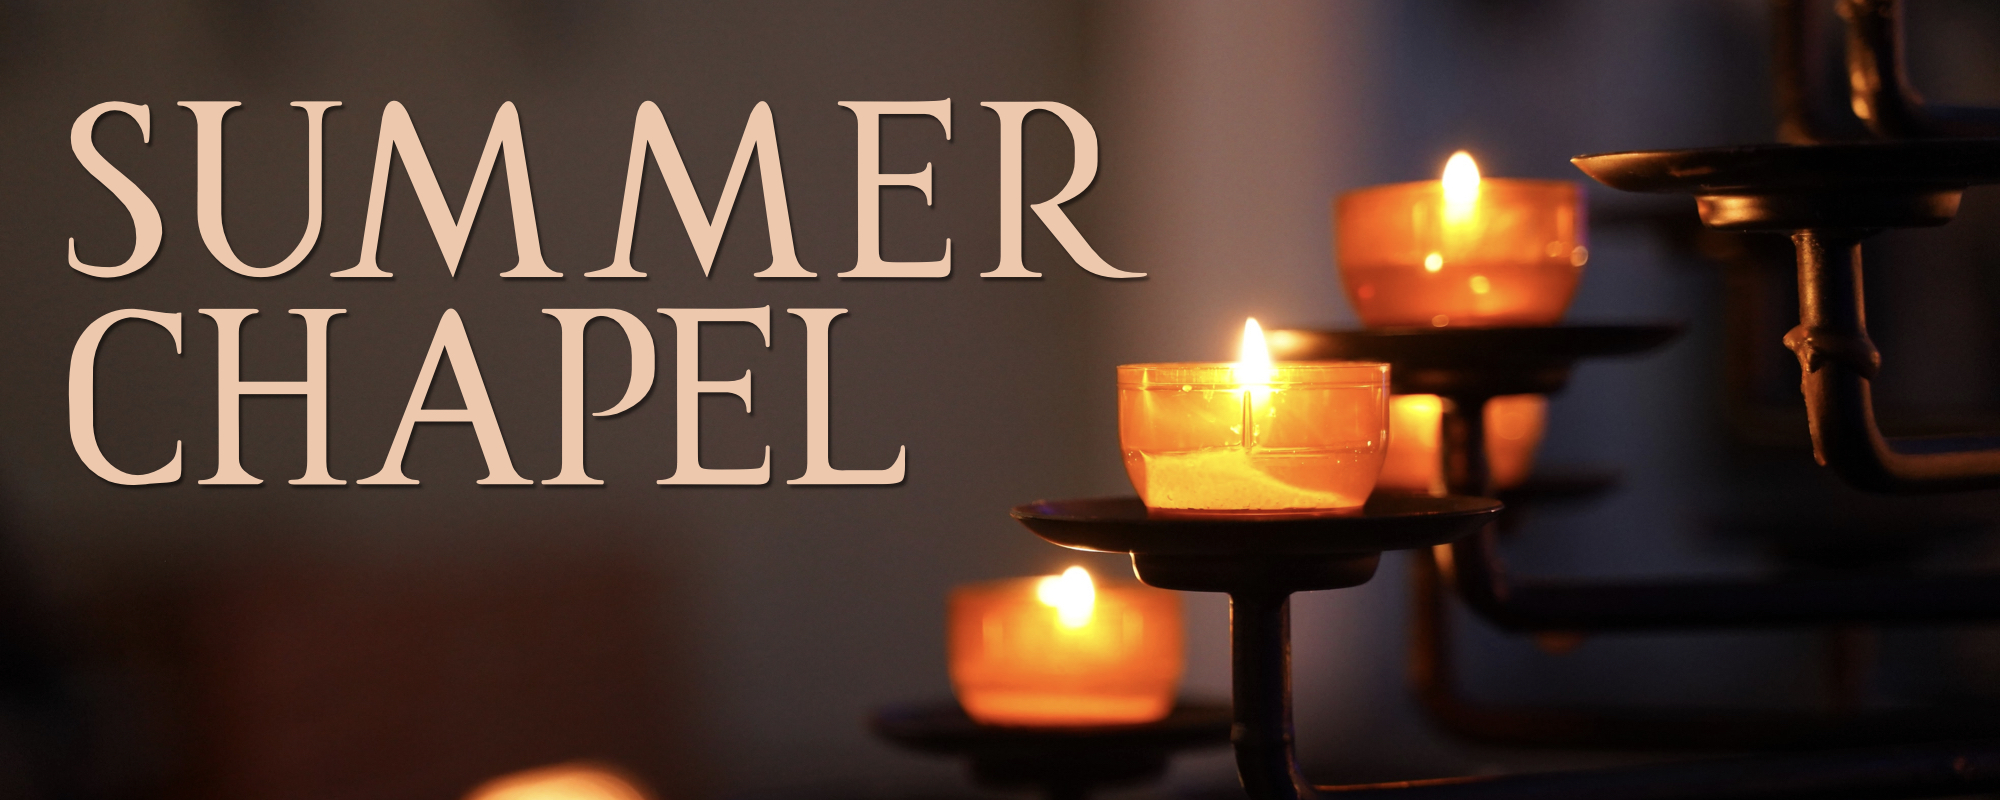 Summer Chapel Order of Worship June 18th